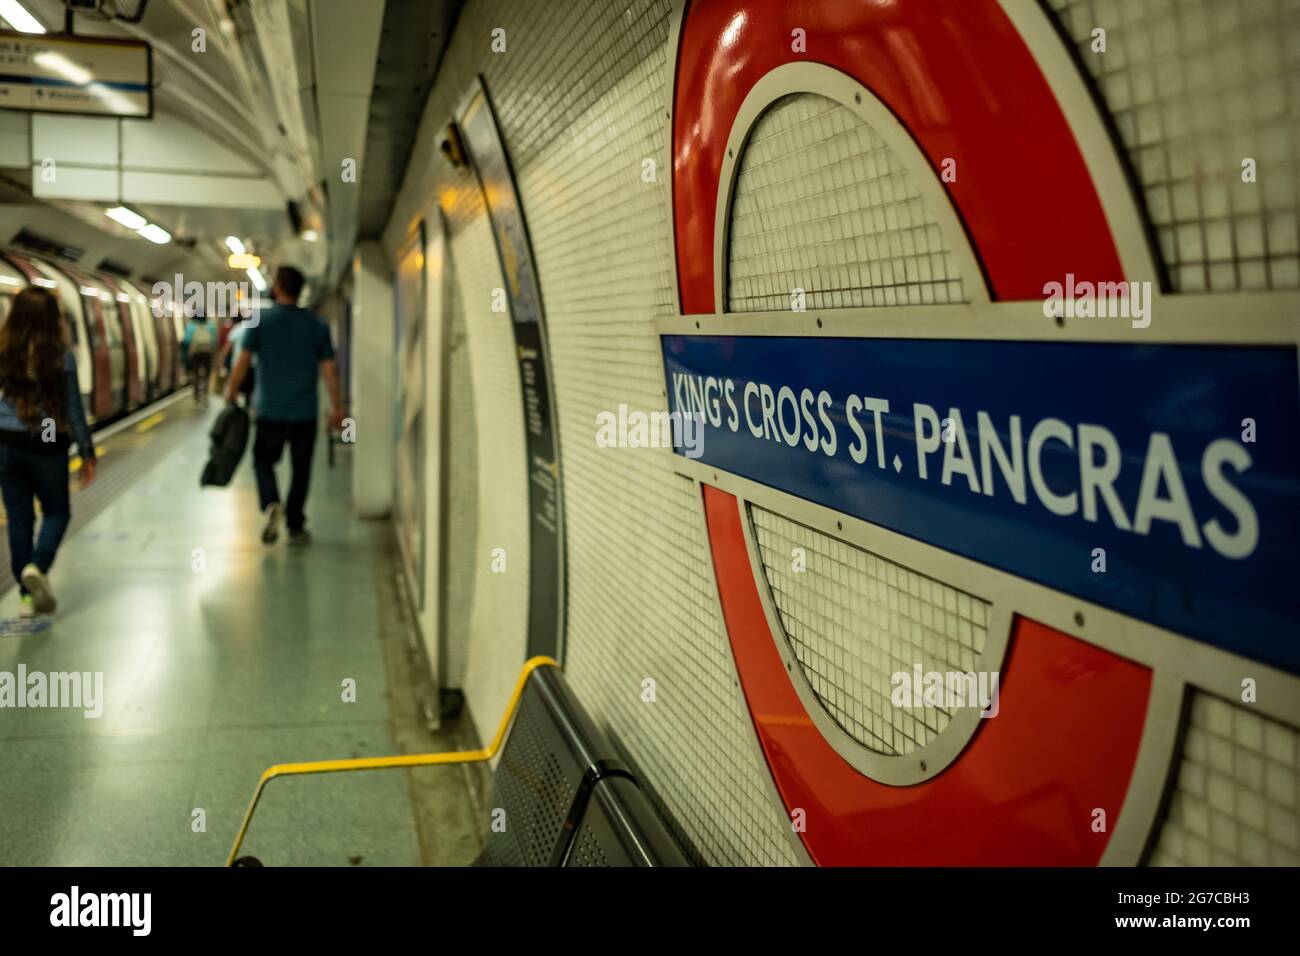 London - Juli 2021: Kingds Cross St Pancras London U-Bahnstation Plattform. Stockfoto